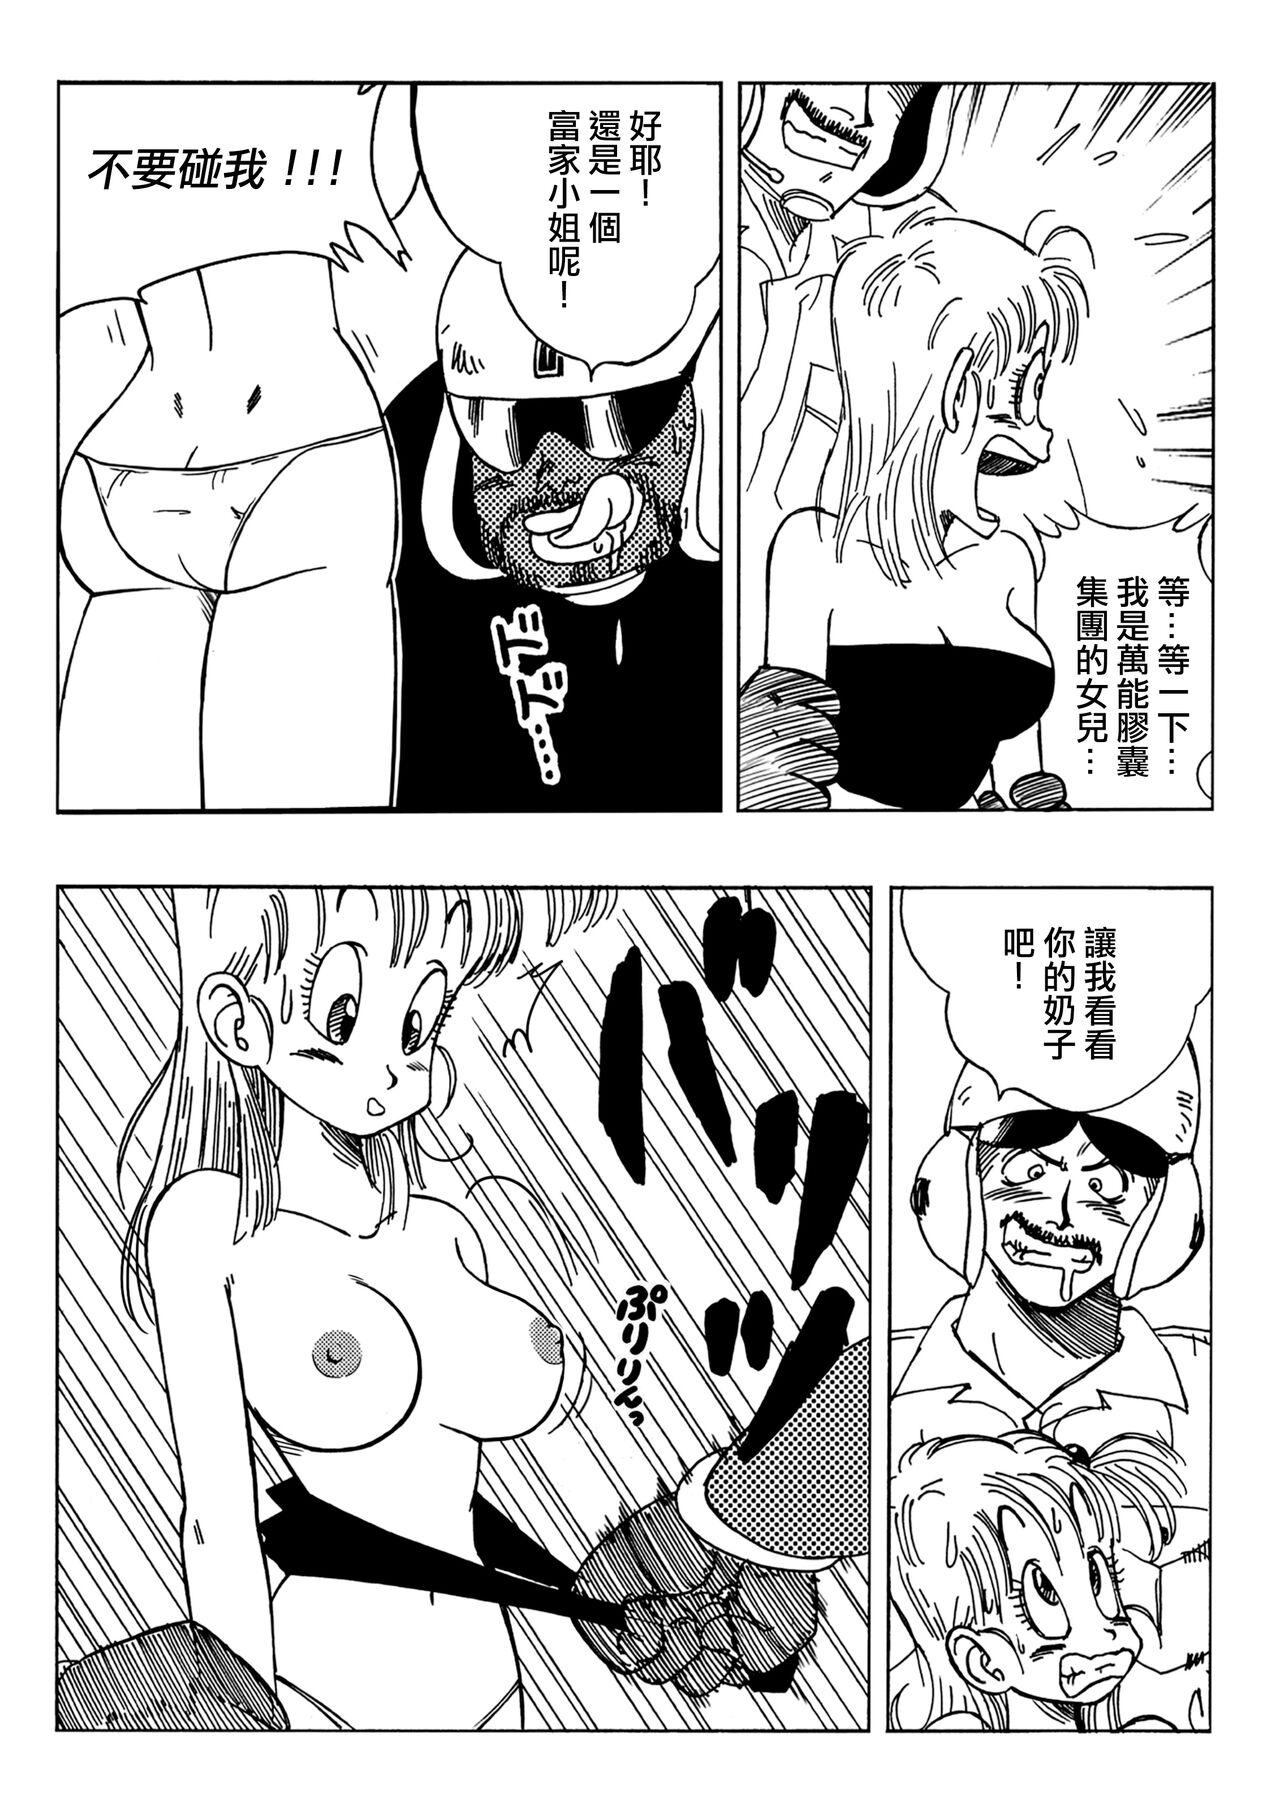 Women Sucking Dicks Bulma and Company - Dragon ball Chileno - Page 5